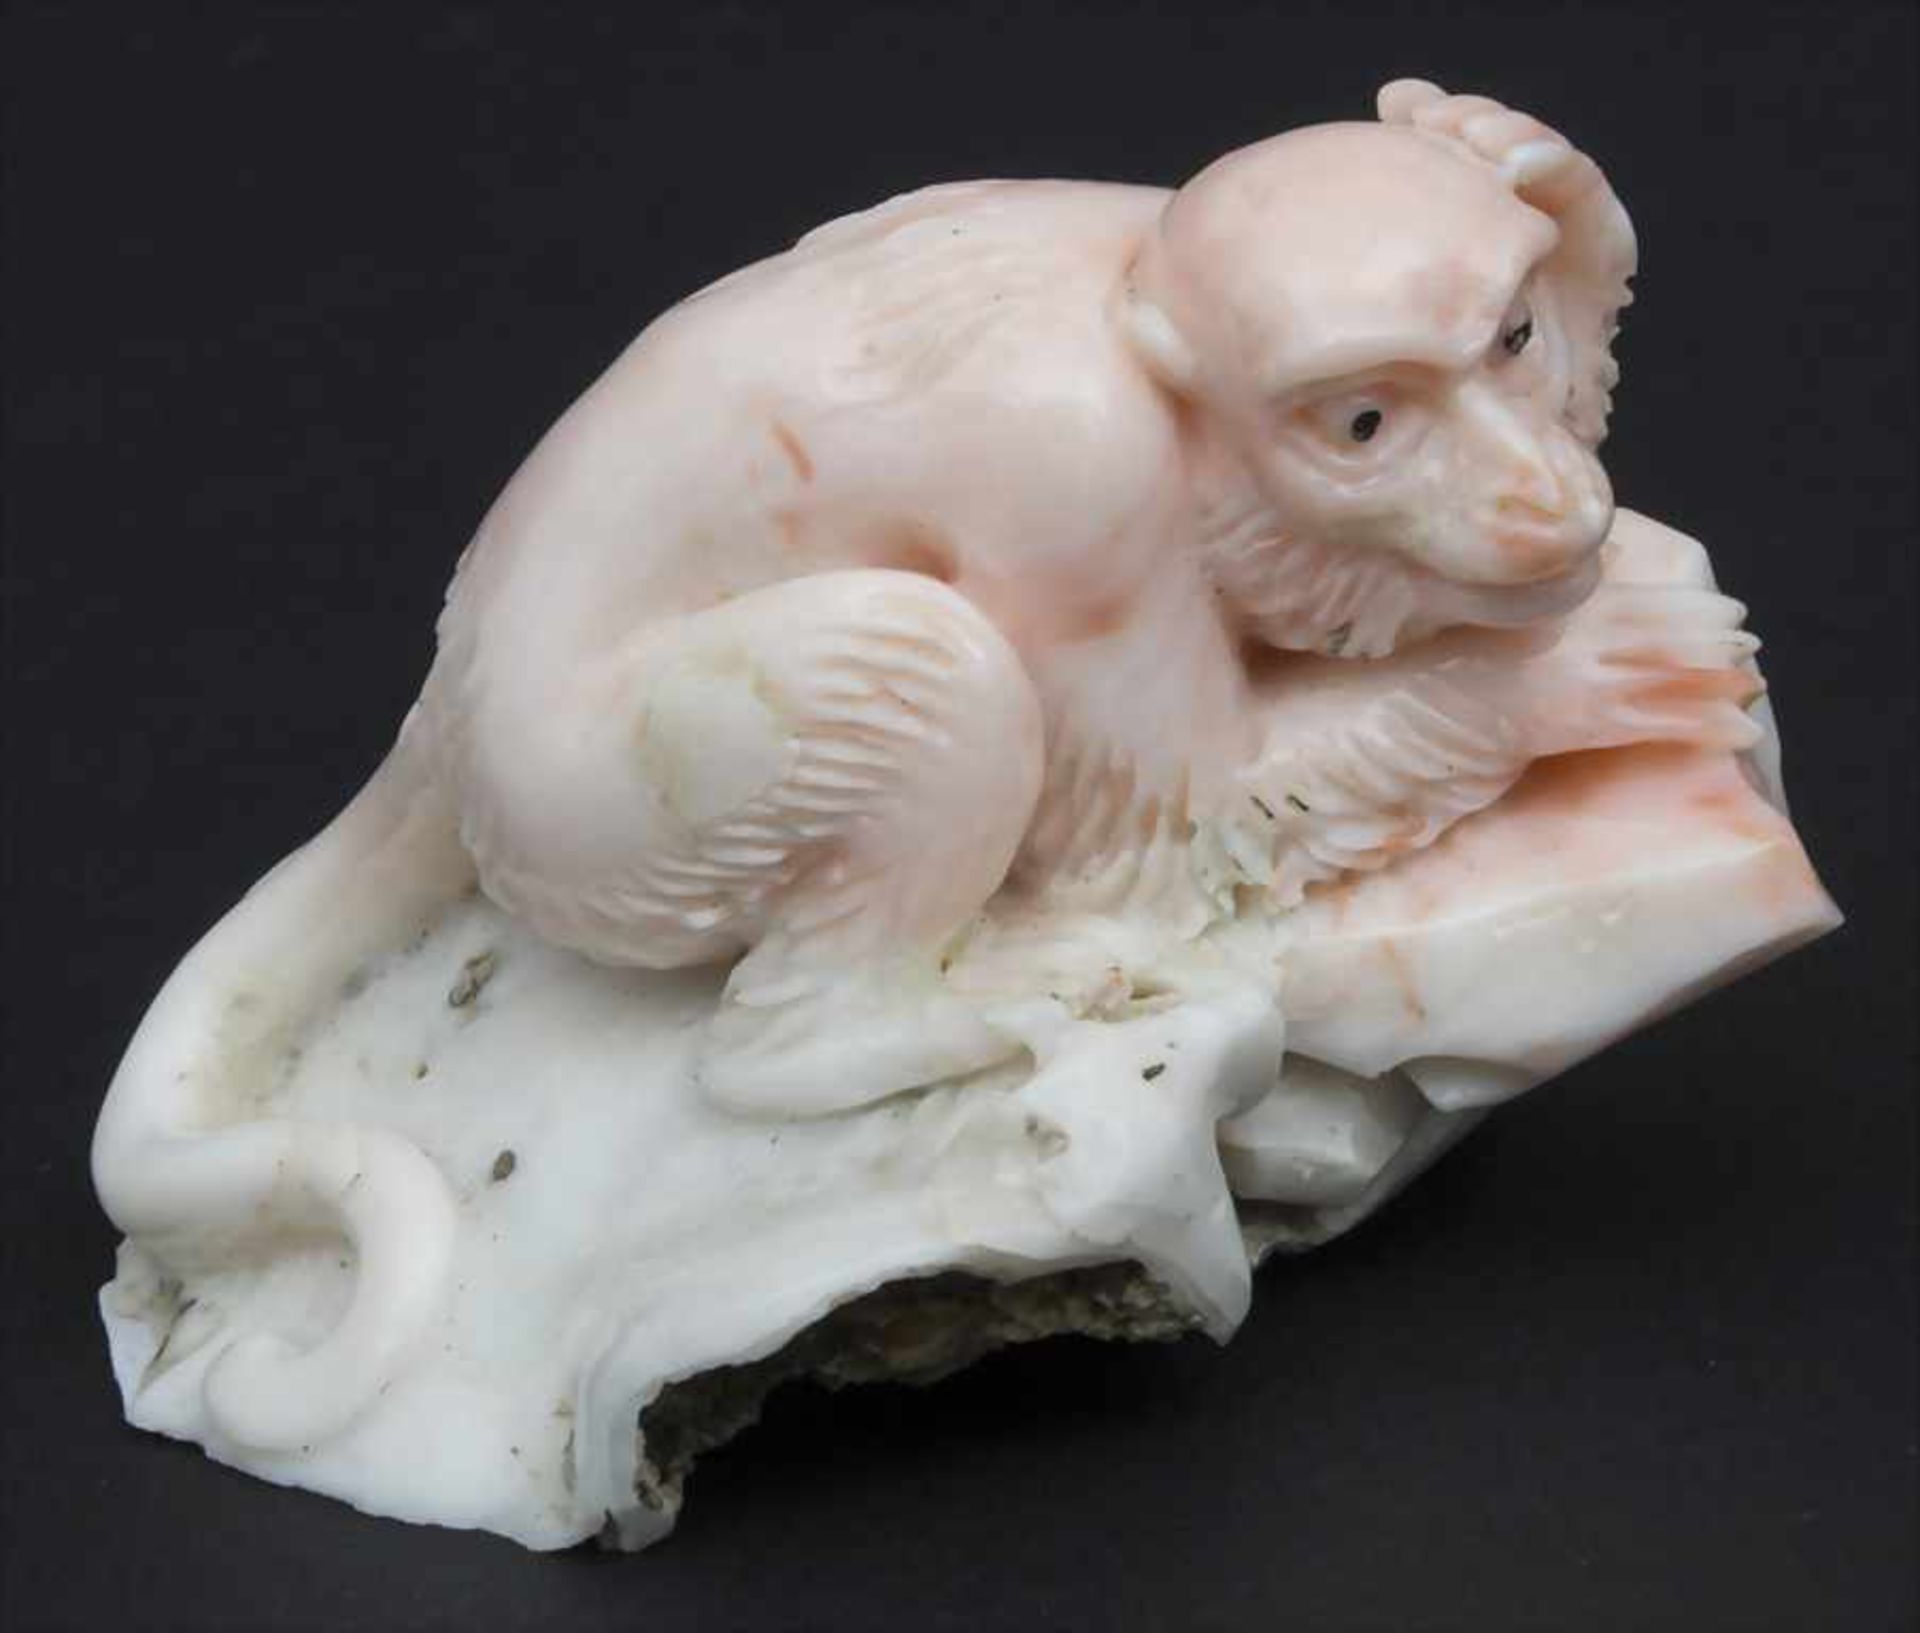 Korallenschnitzerei 'Affe' / A coral carving 'Monkey', China, 18. Jh.Material: Koralle (weiß und